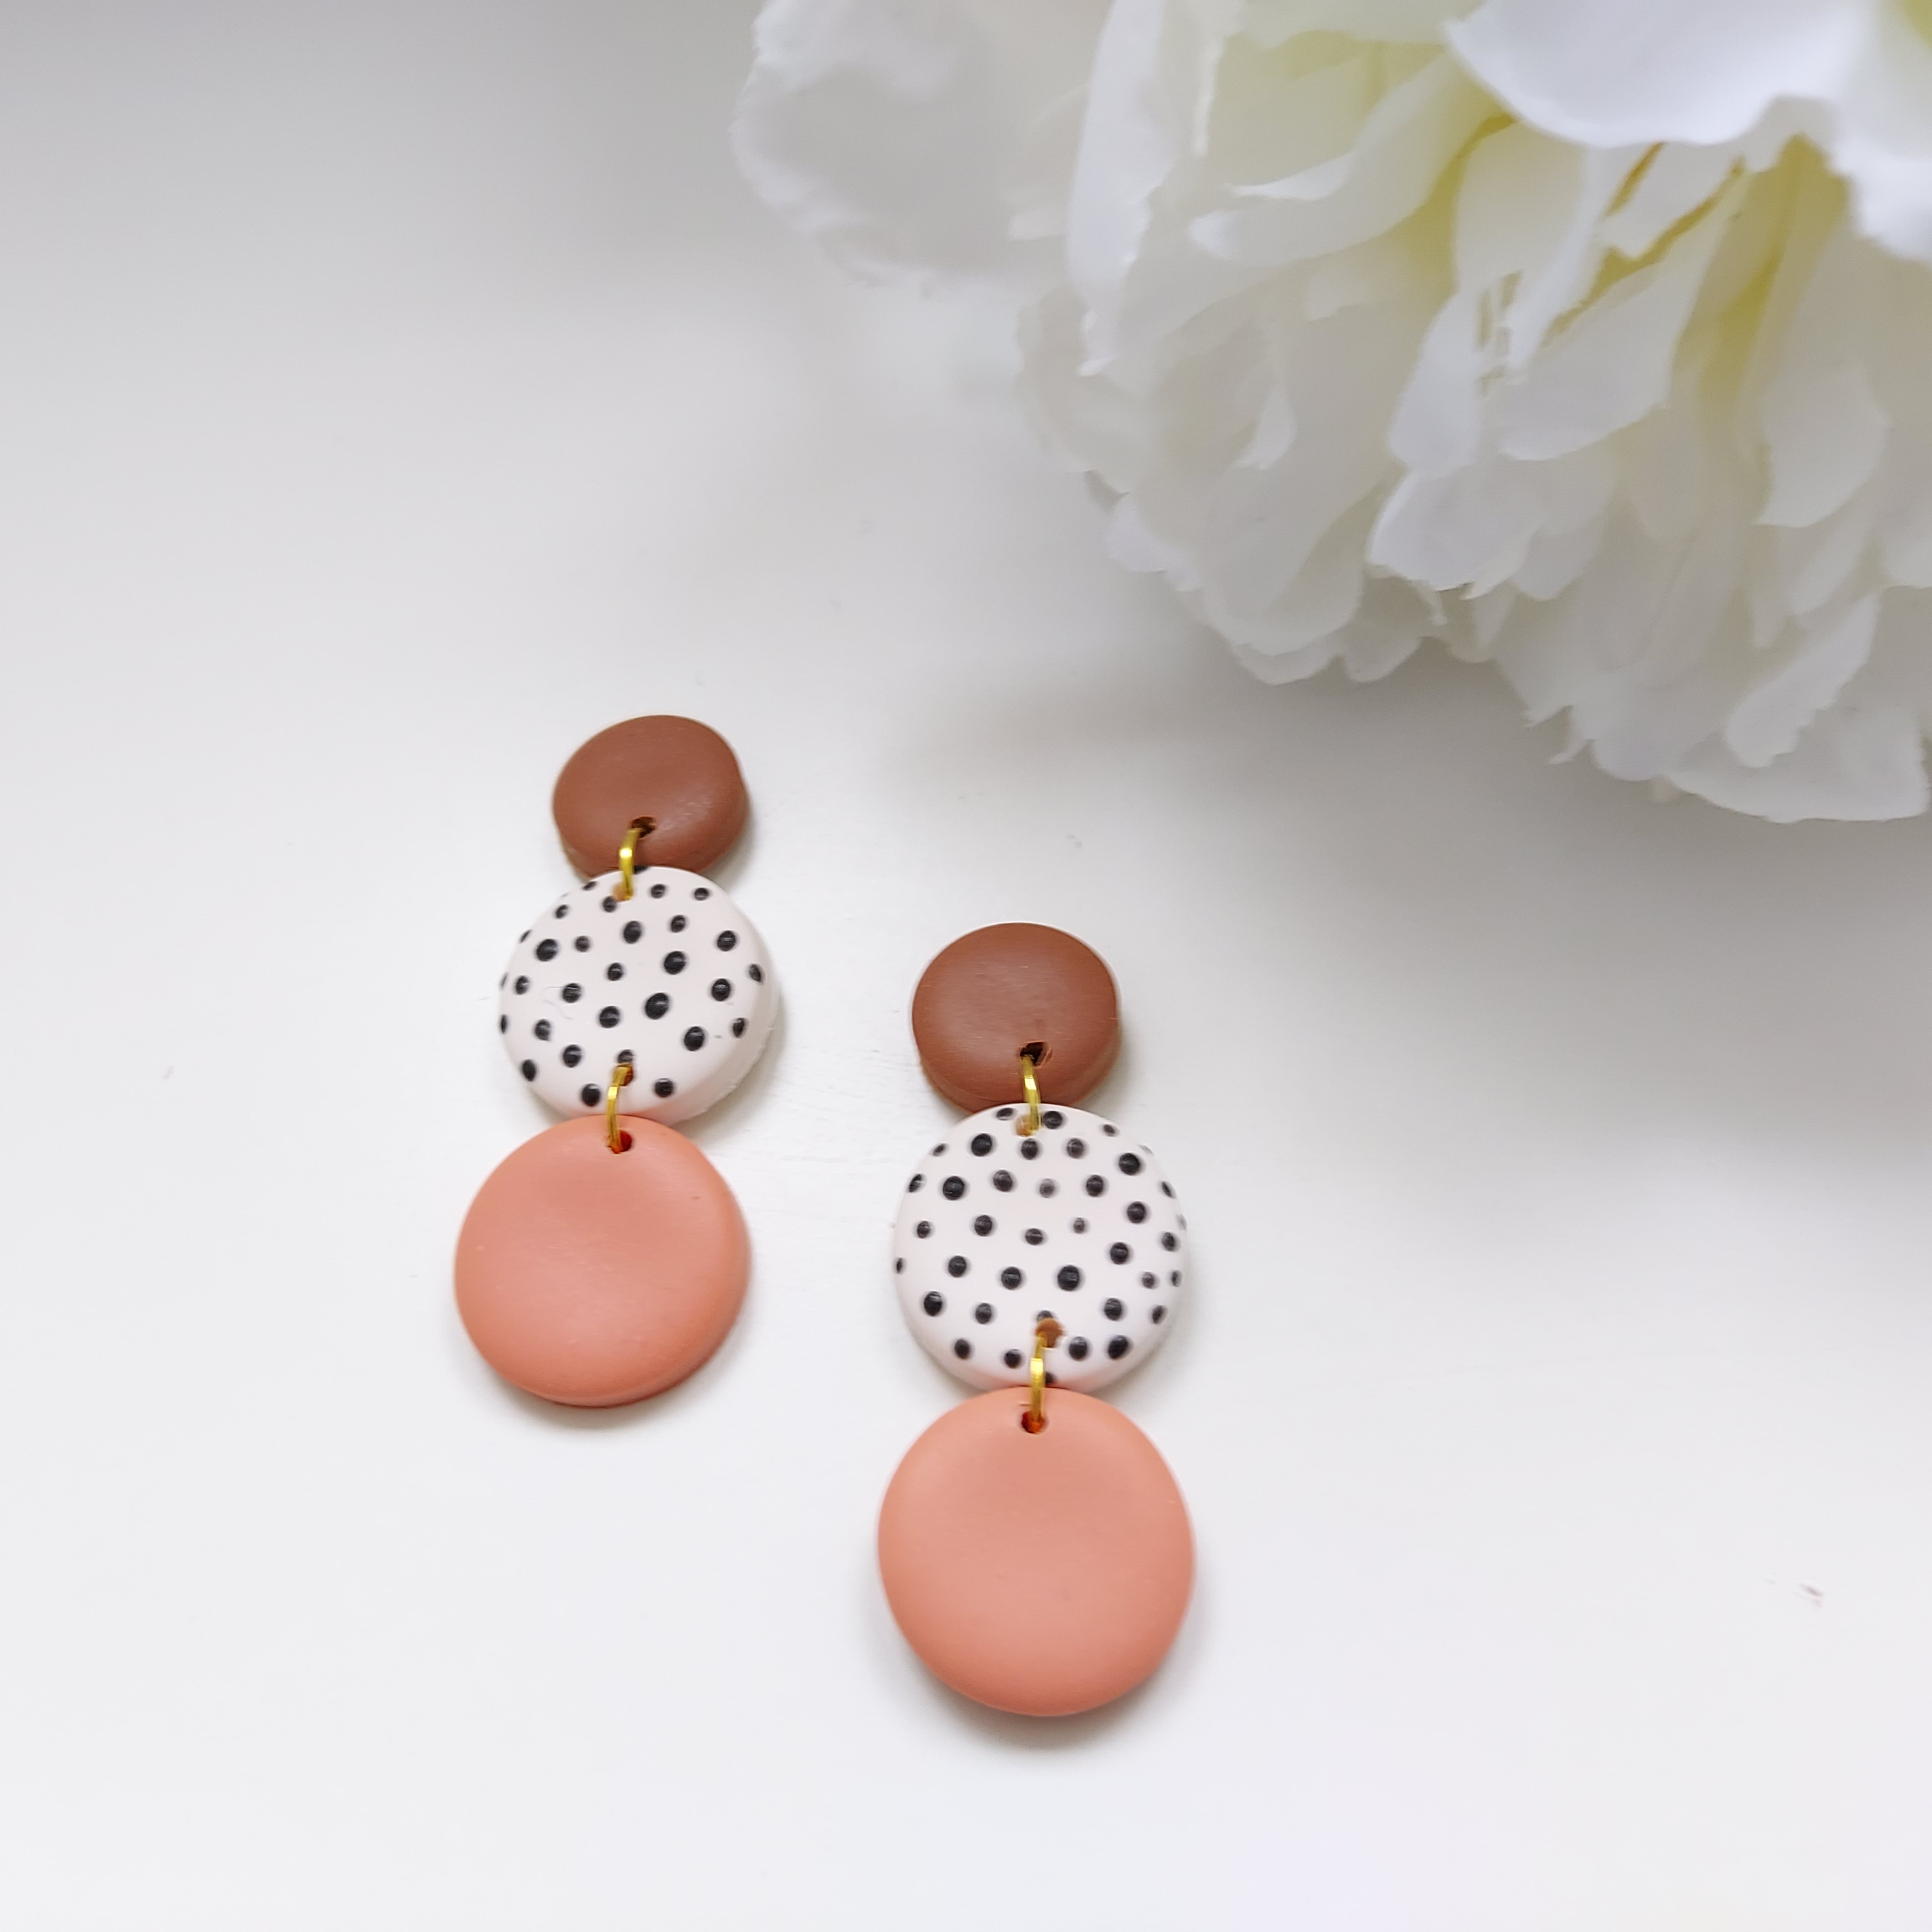 Polymer Clay Earrings - Polka Dots Stud Earrings